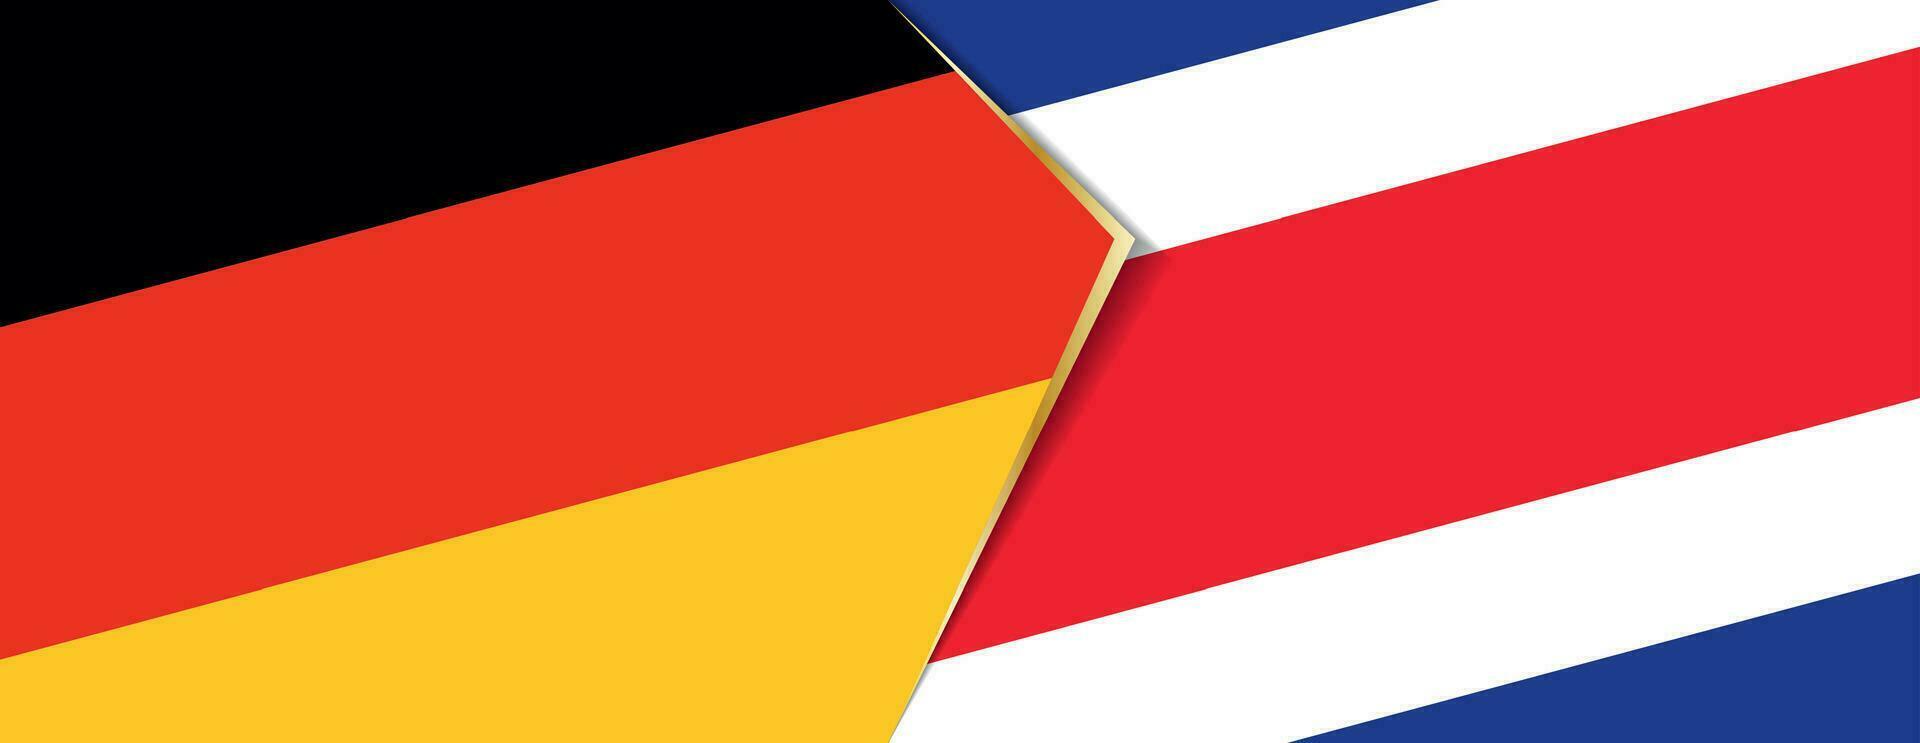 Duitsland en costa rica vlaggen, twee vector vlaggen.